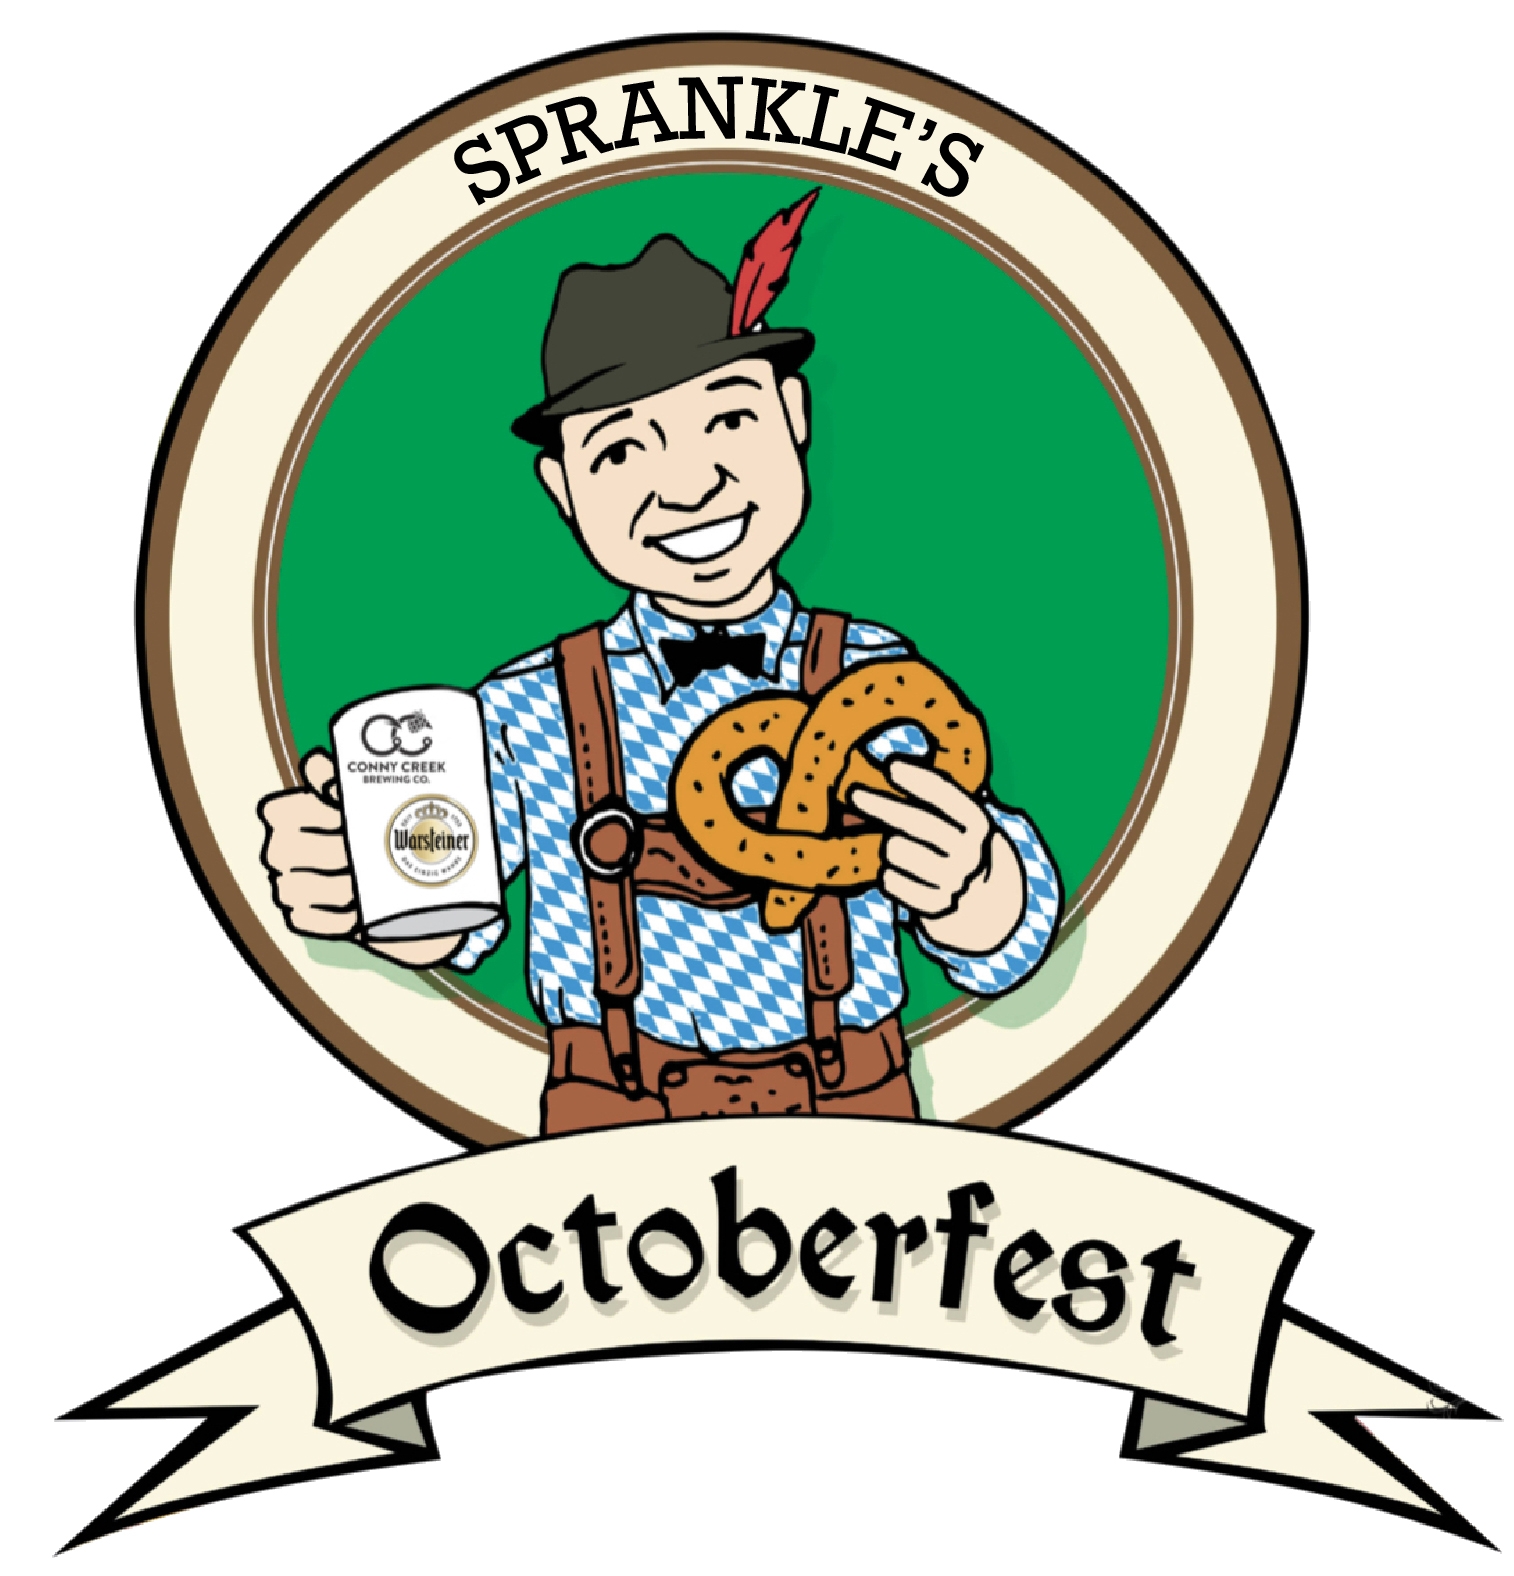 Sprankle's Octoberfest (Saxonburg)